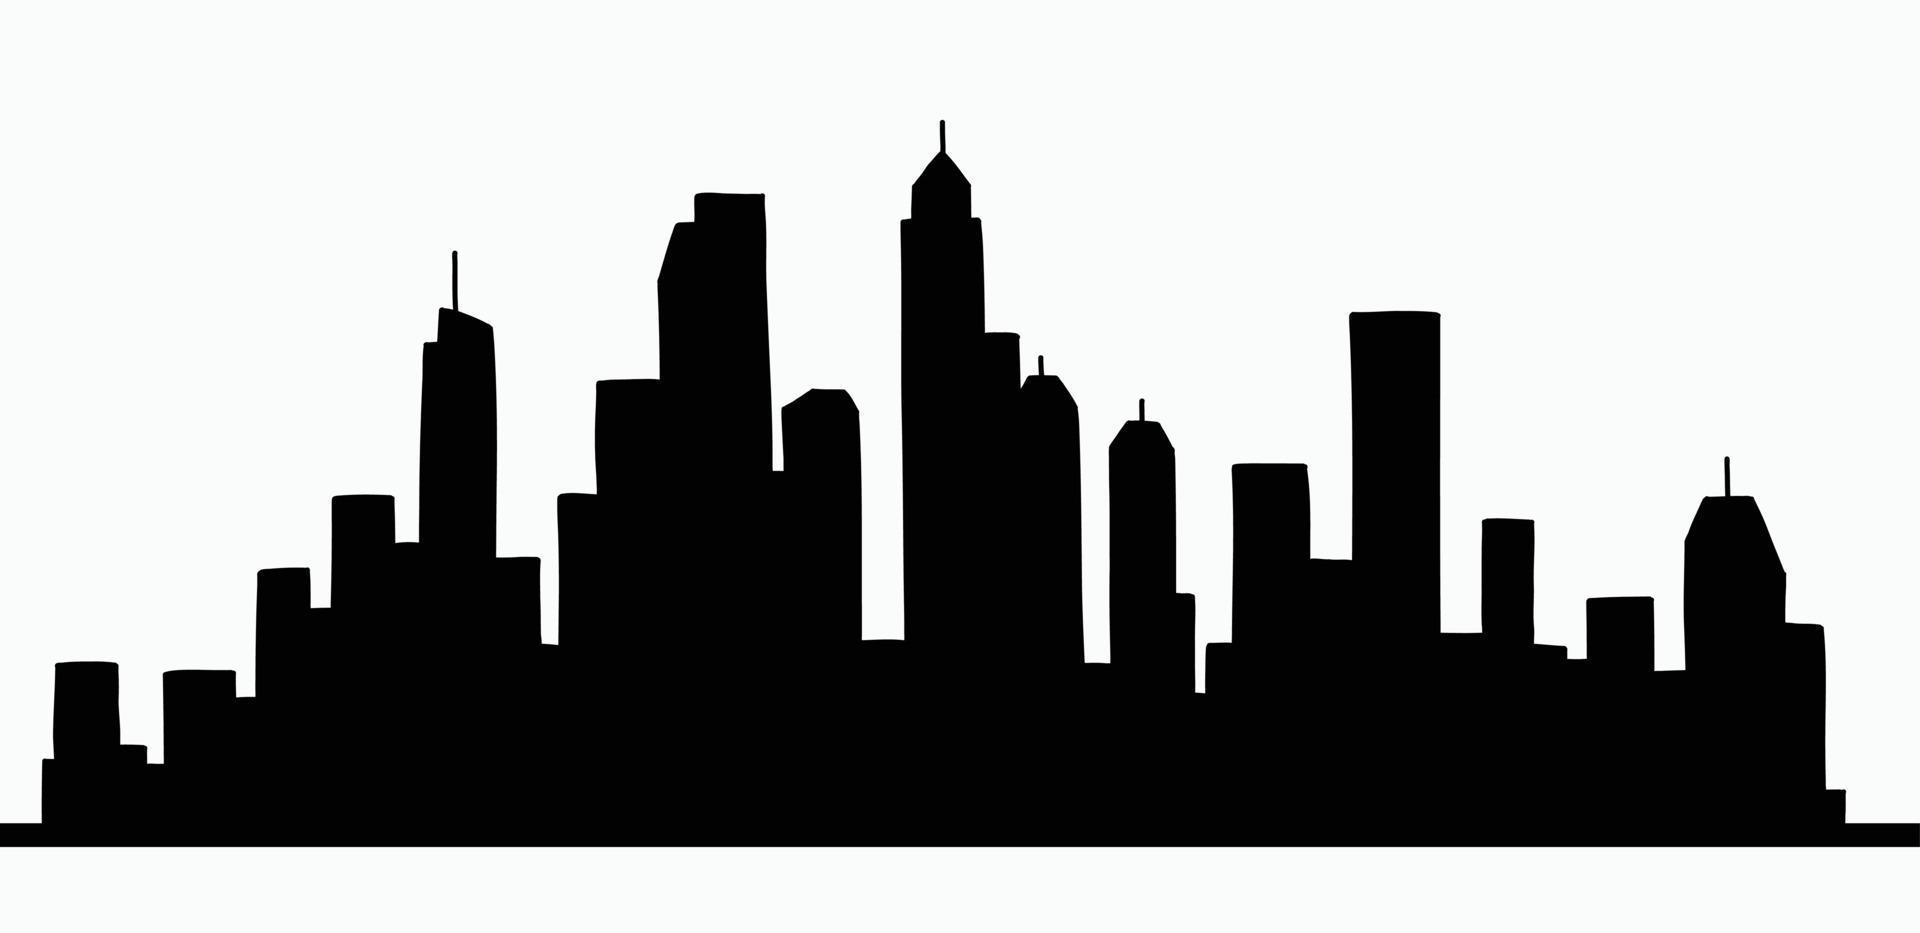 modern stadsbild skyline kontur doodle ritning på vit bakgrund. vektor